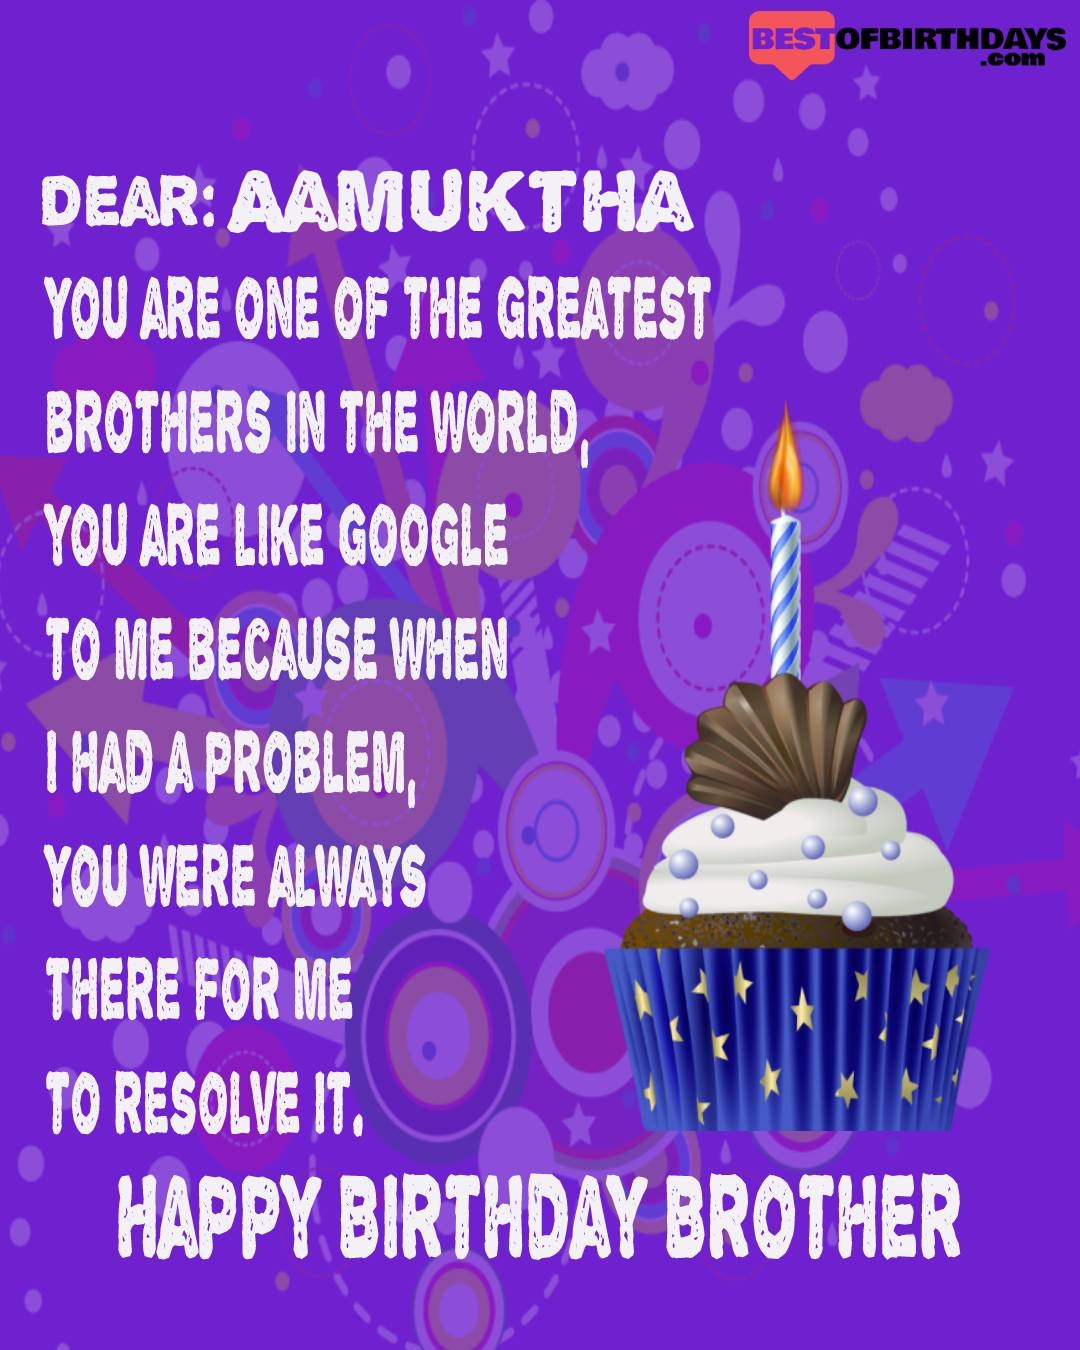 Happy birthday aamuktha bhai brother bro